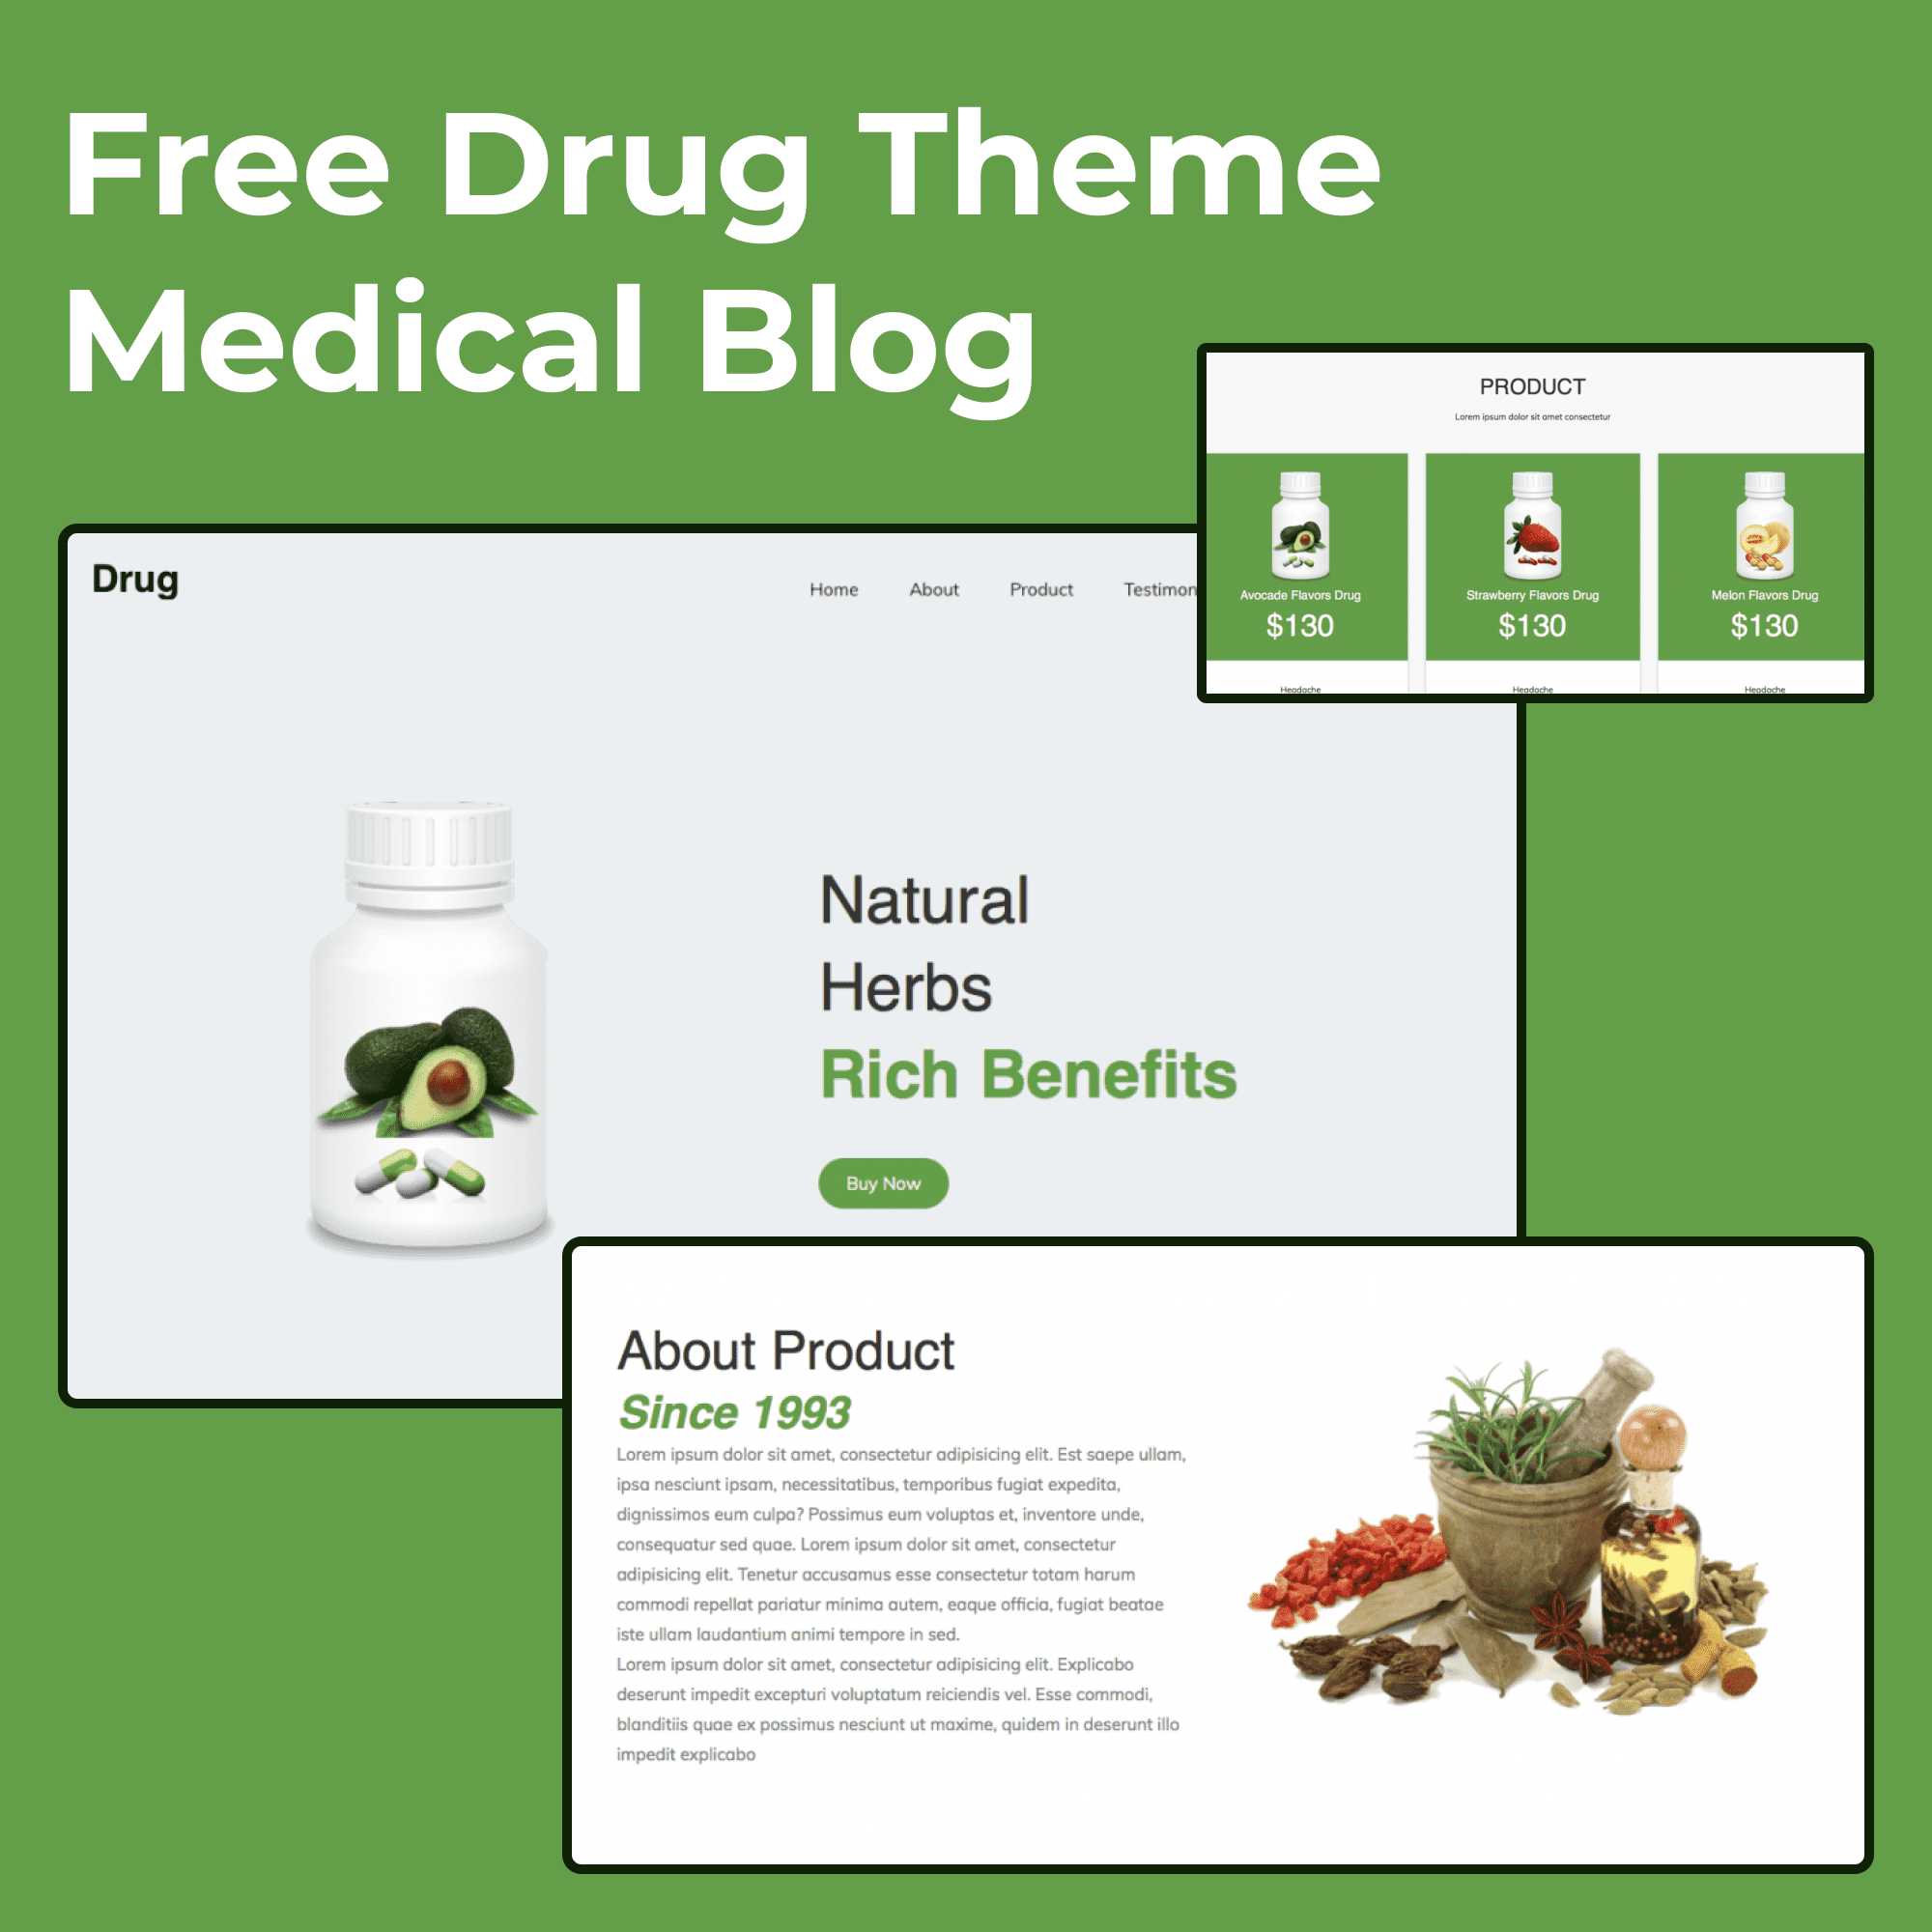 Free Drug Theme Medical Blog main image